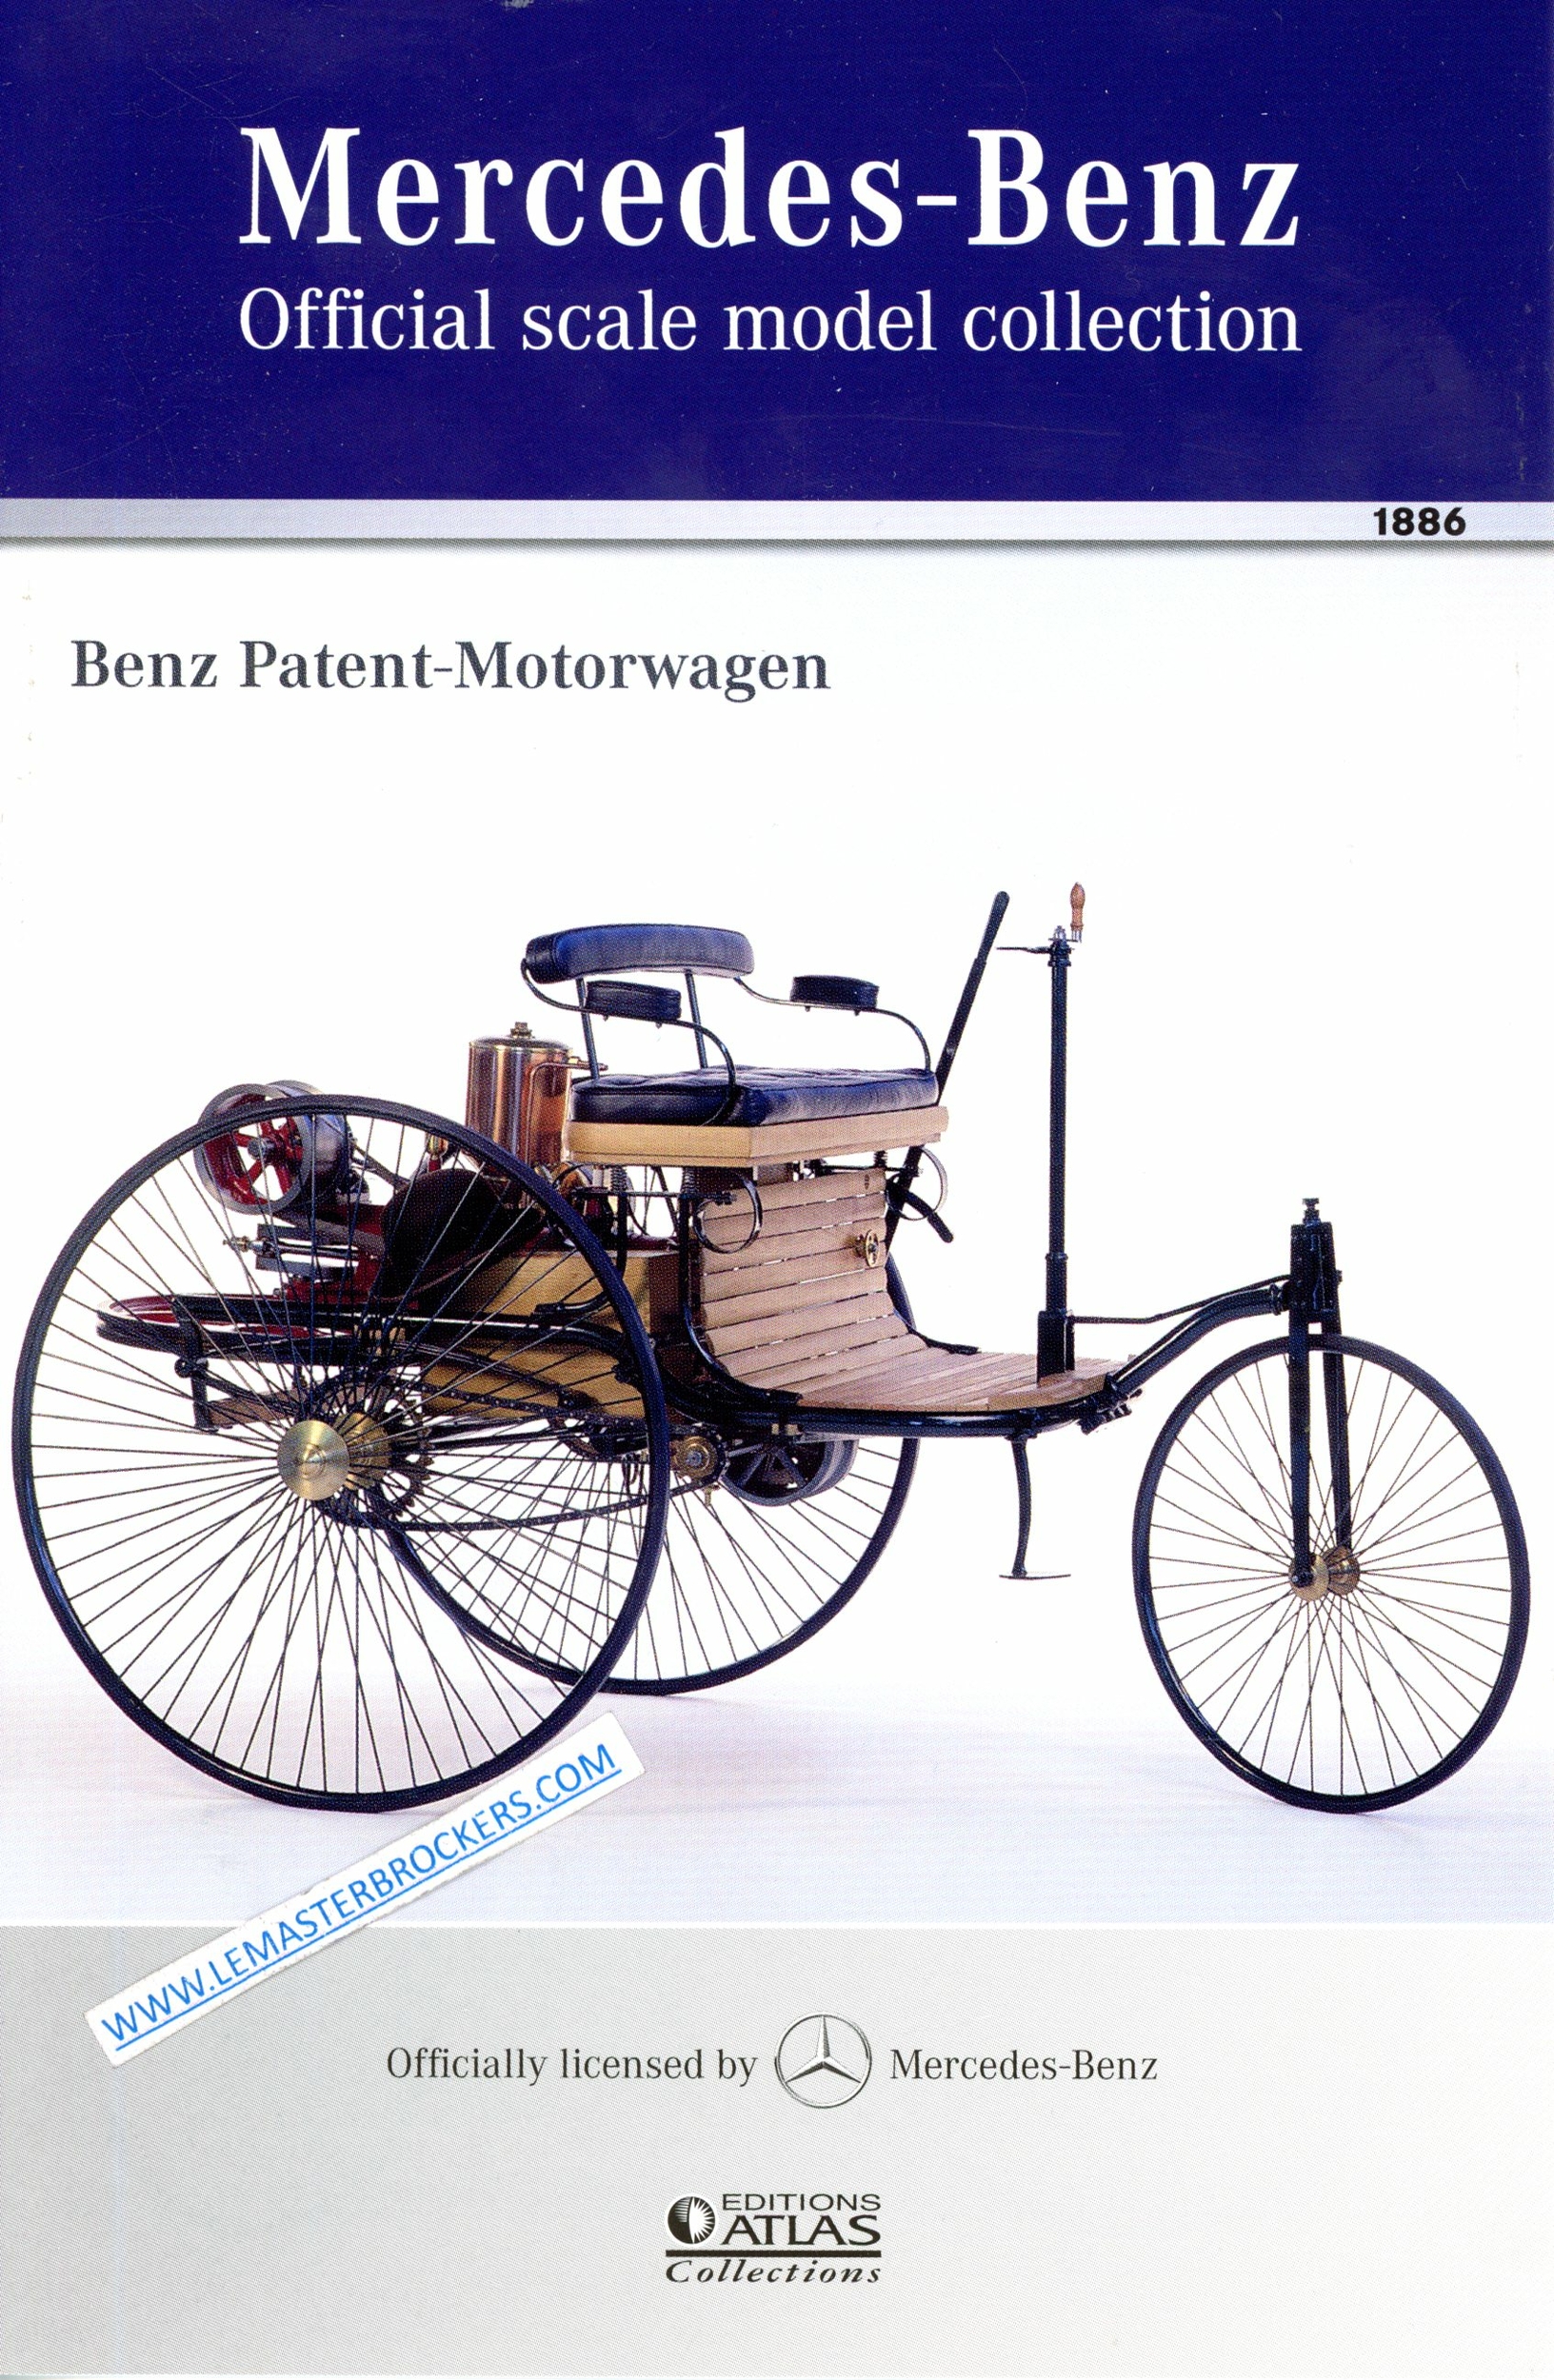 FASCICULE MERCEDES BENZ PATENT MOTORWAGEN 1886